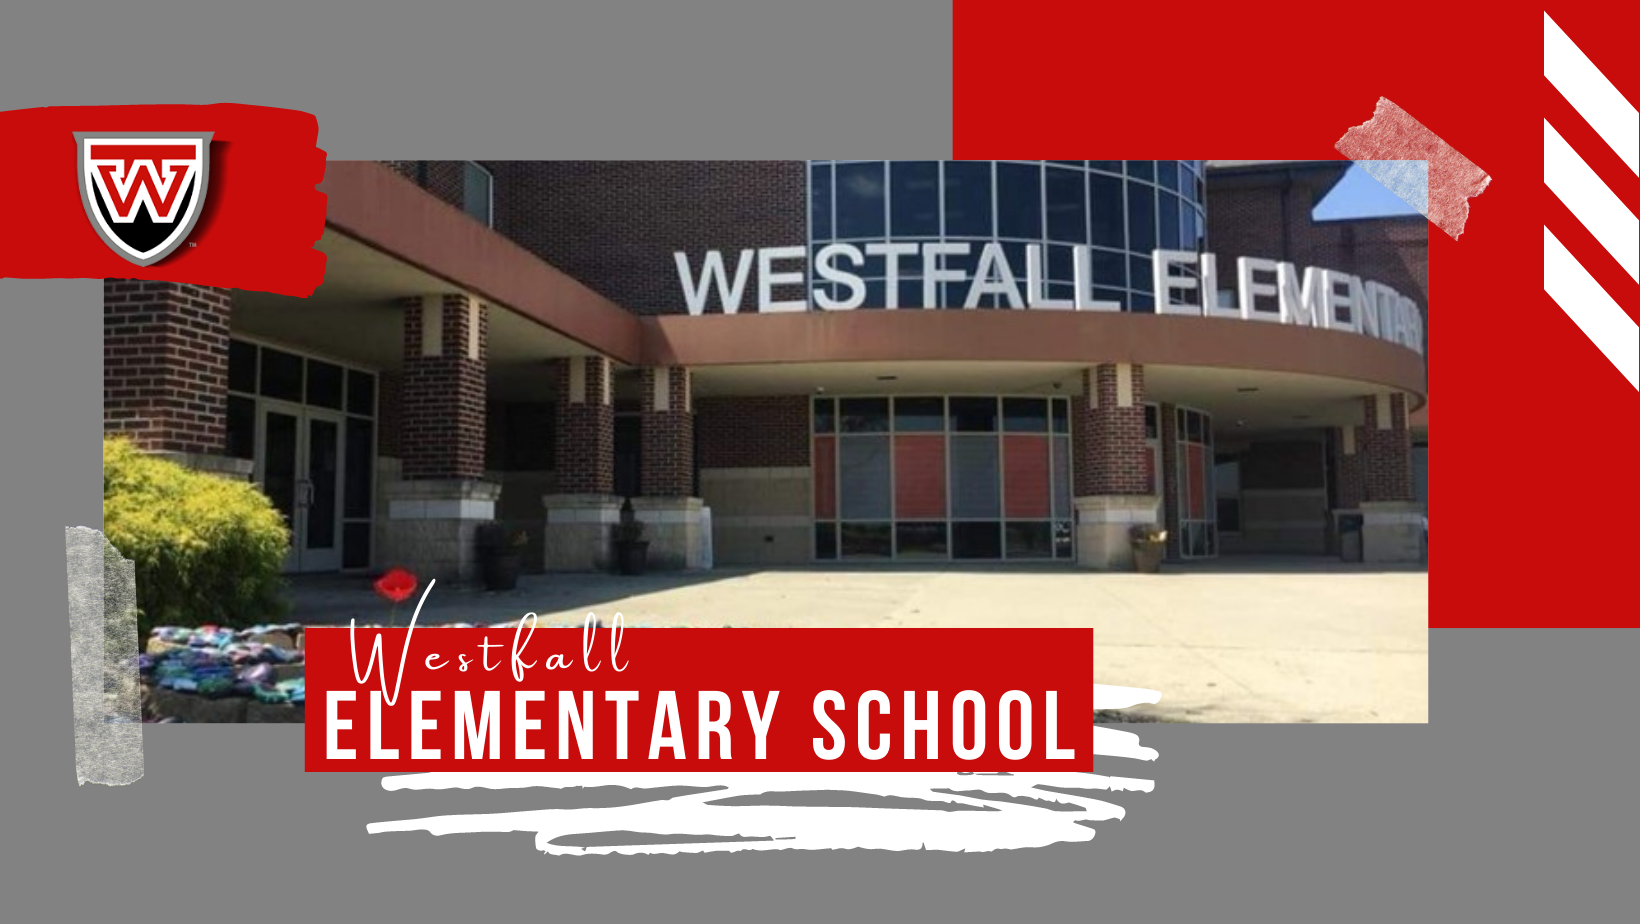 Westfall Elementary School Home of the Mustangs